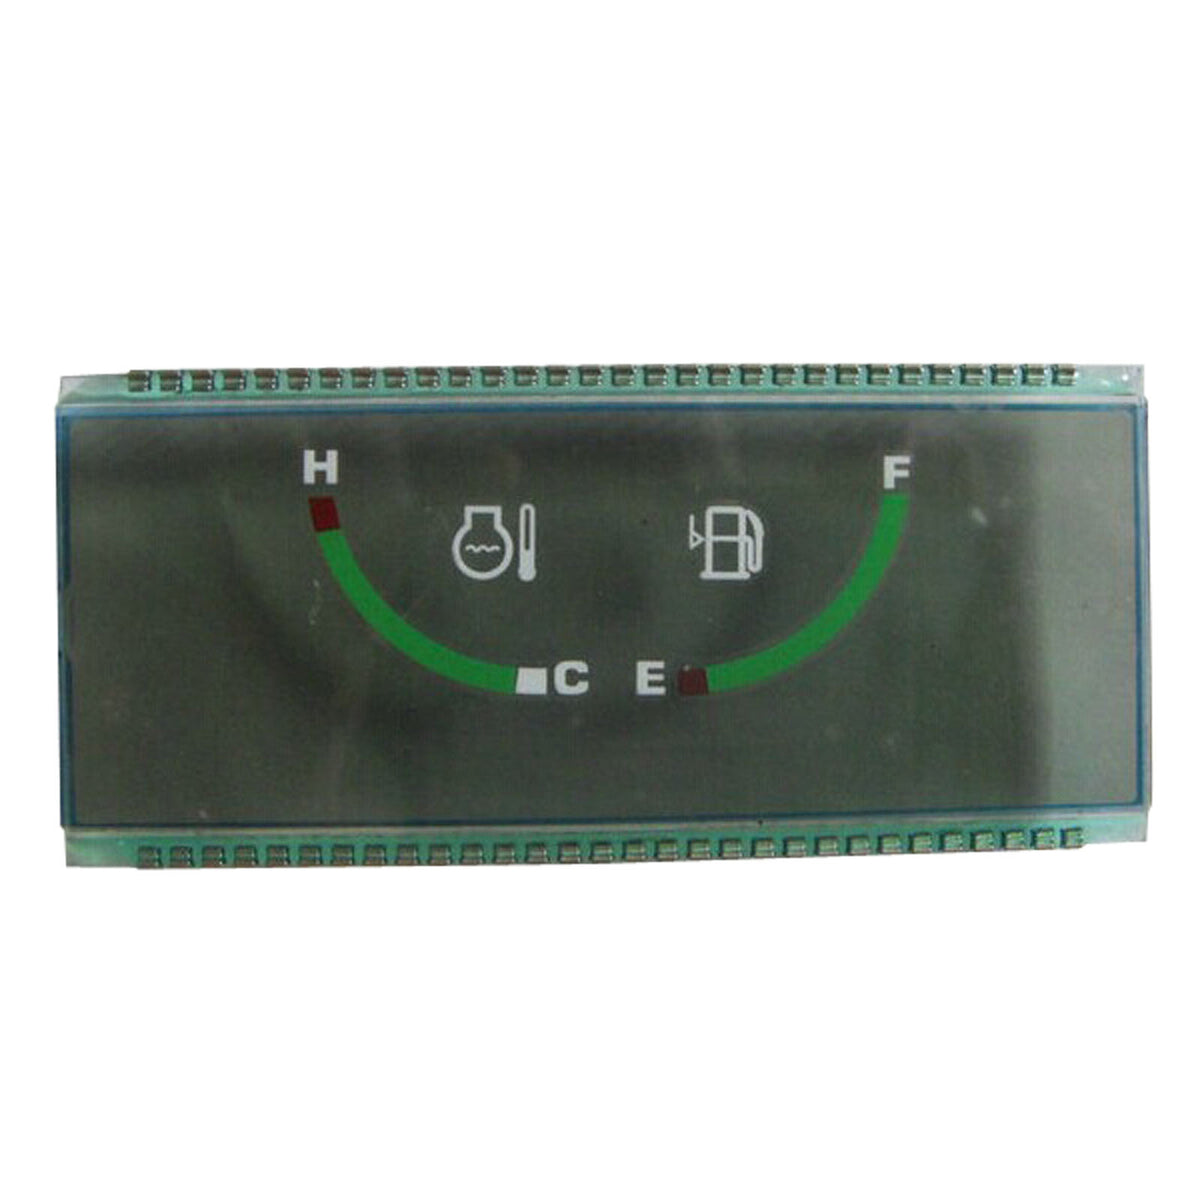 Monitor LCD Display for Daewoo Doosan Excavator DH225-7 - Sinocmp